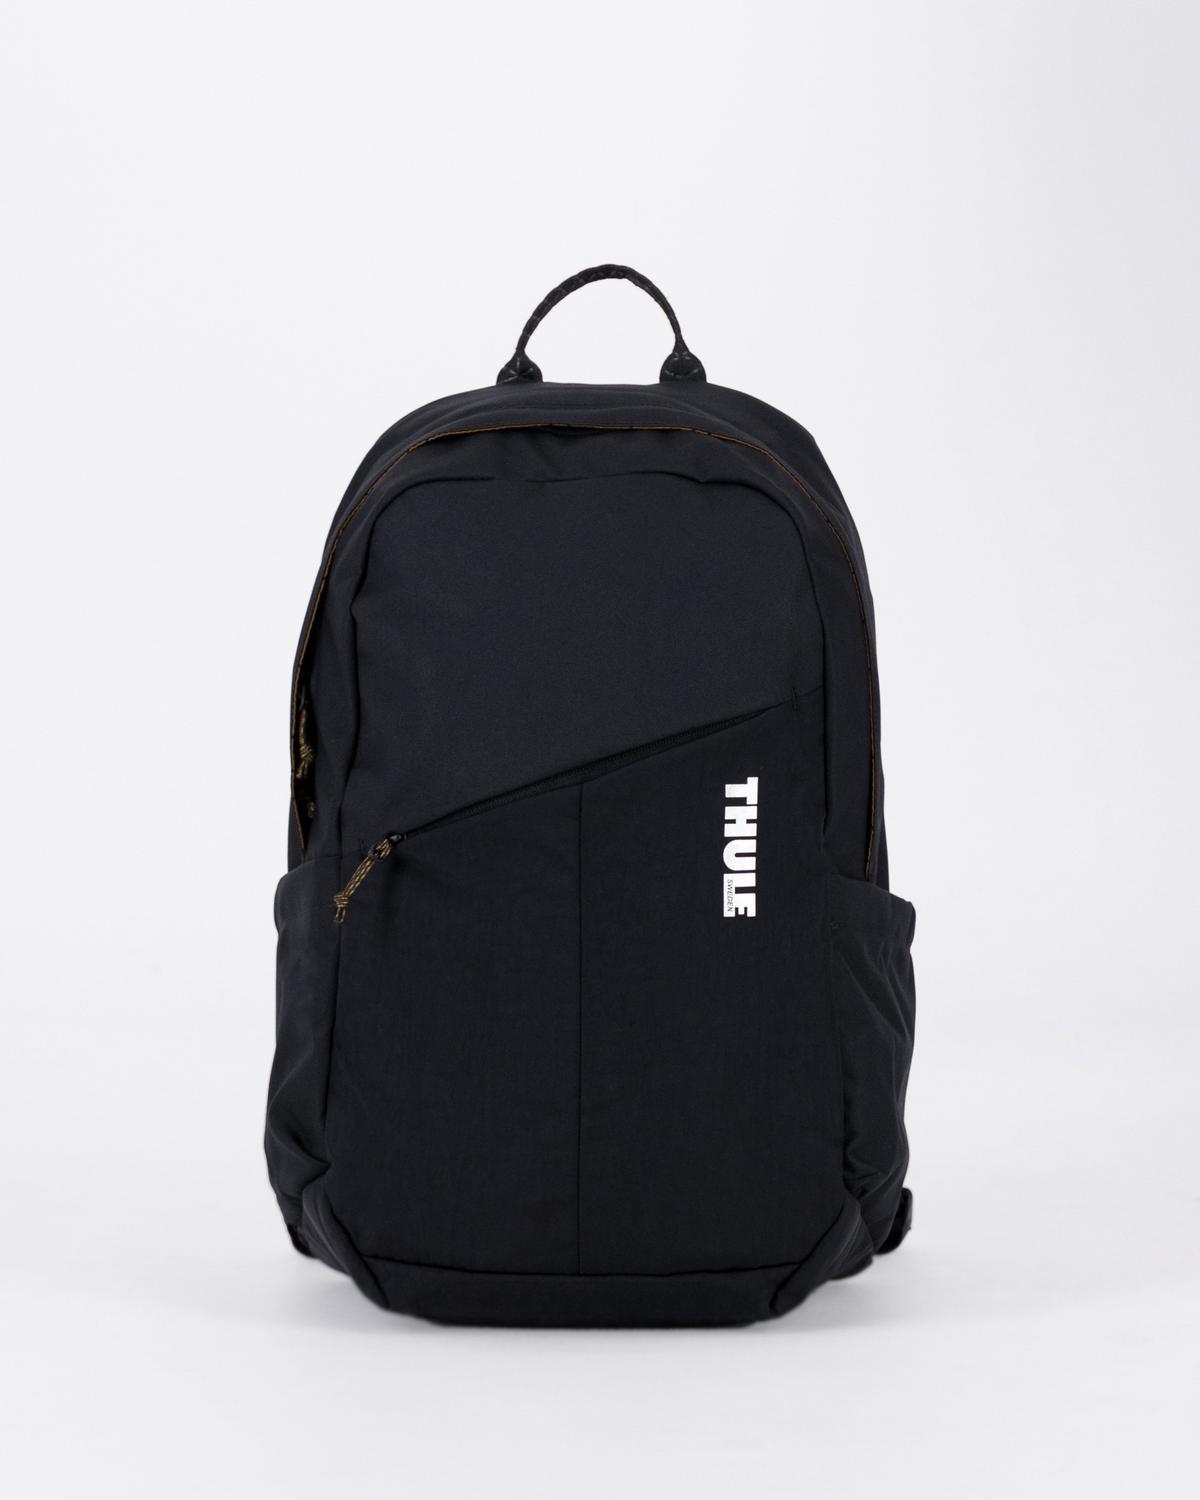 Thule Notus 20L Backpack -  Black